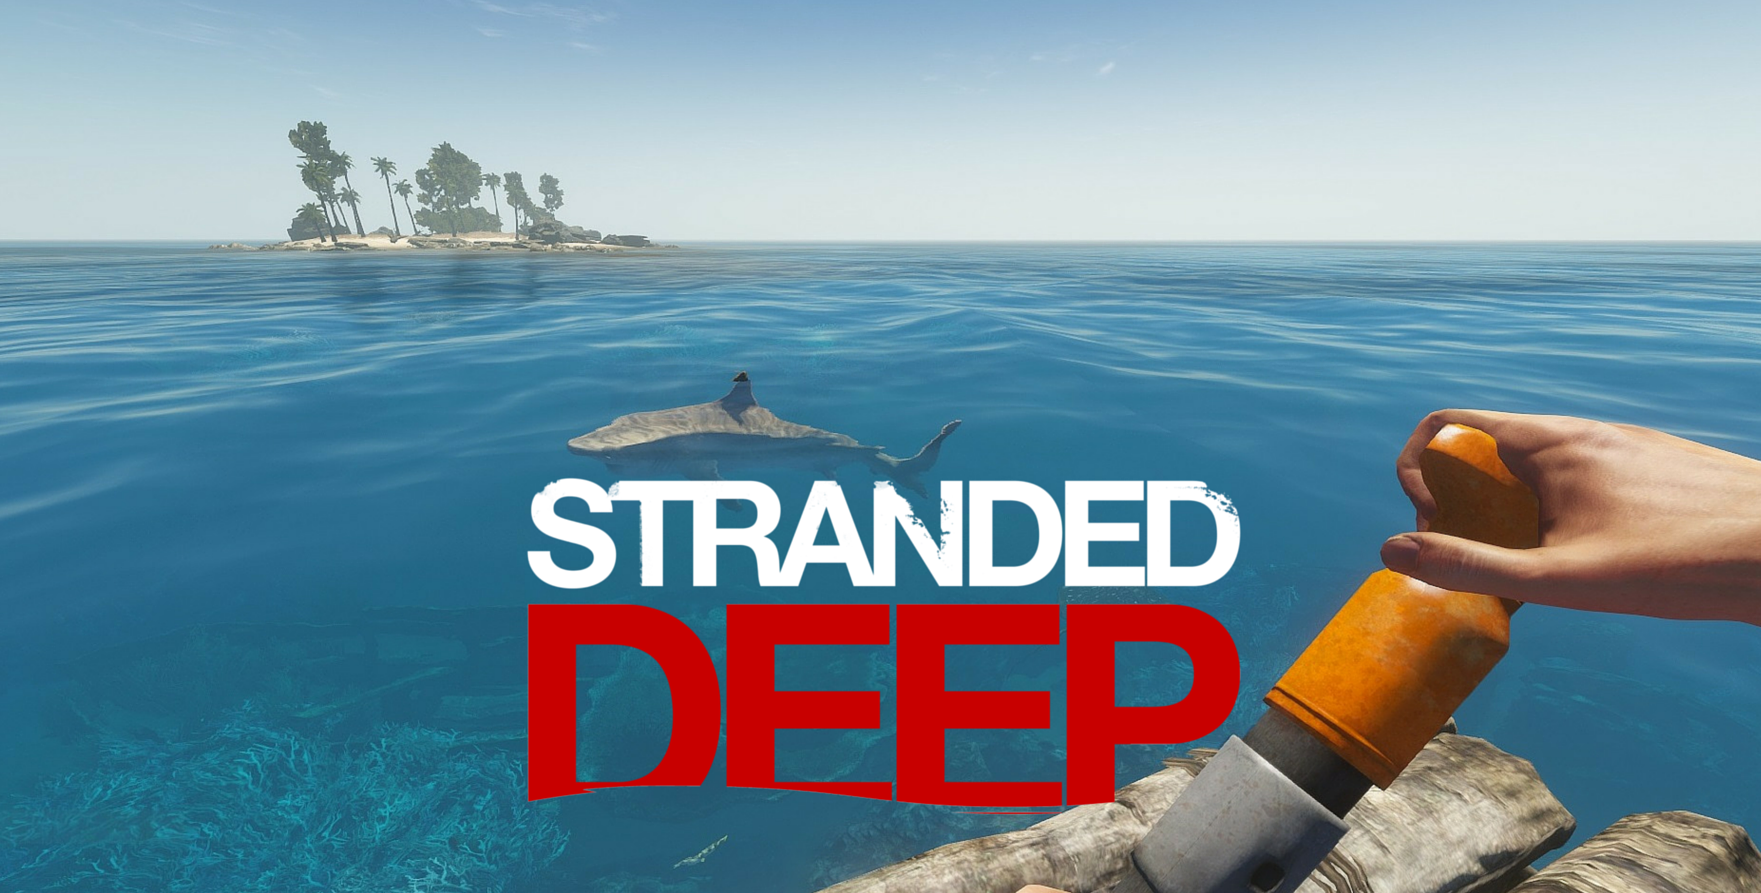 stranded deep steam